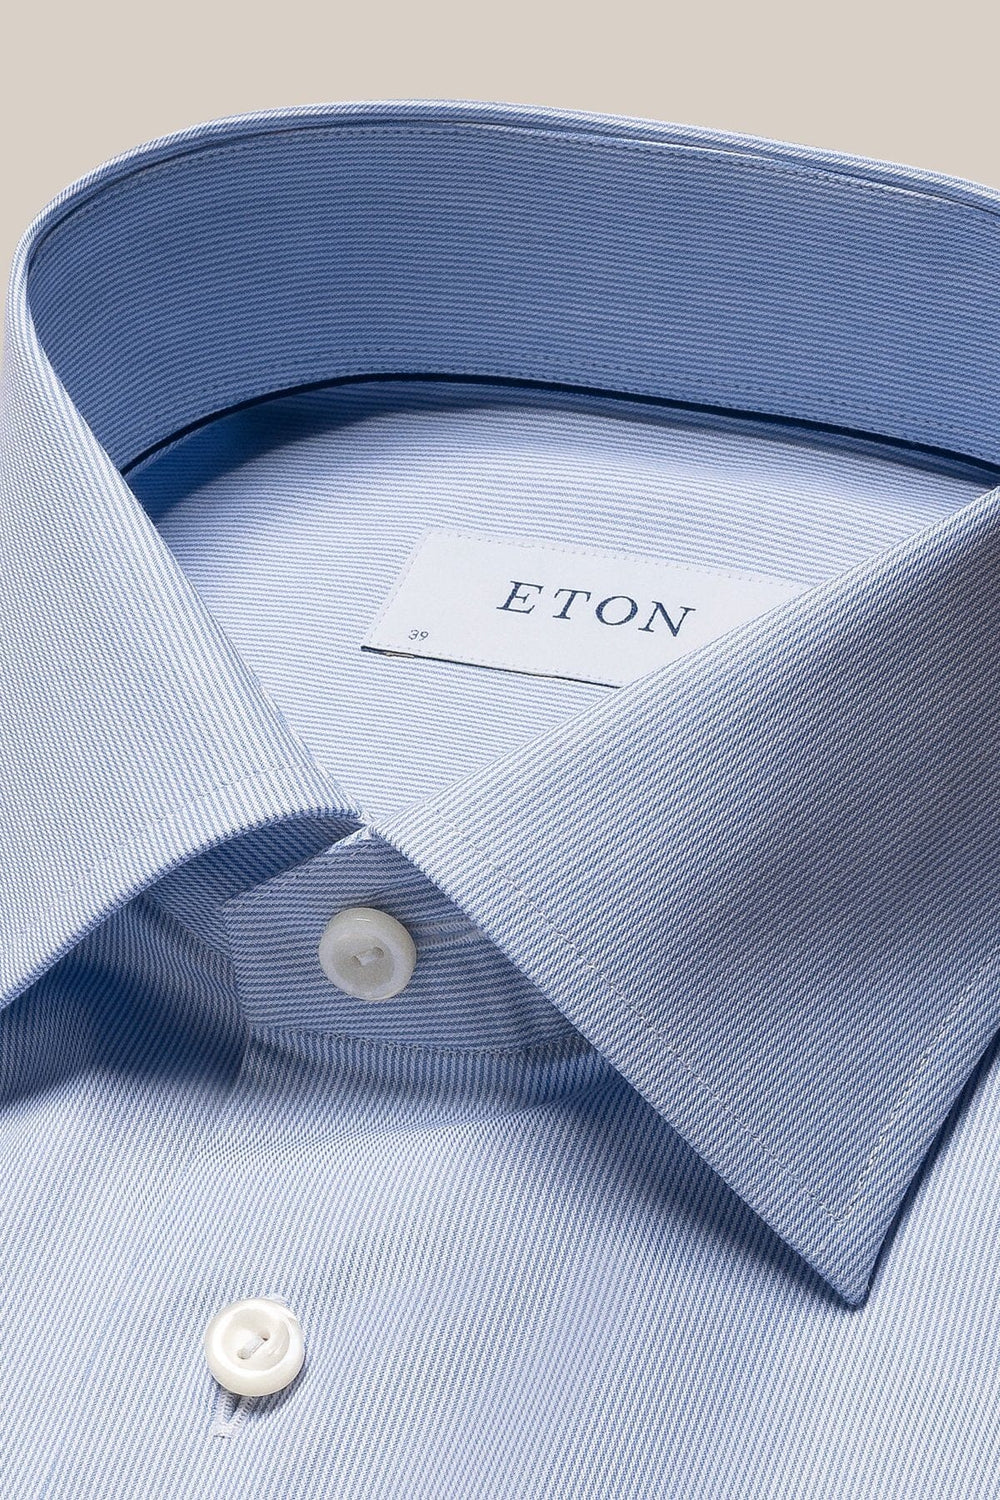 Chemise habillée Eton 